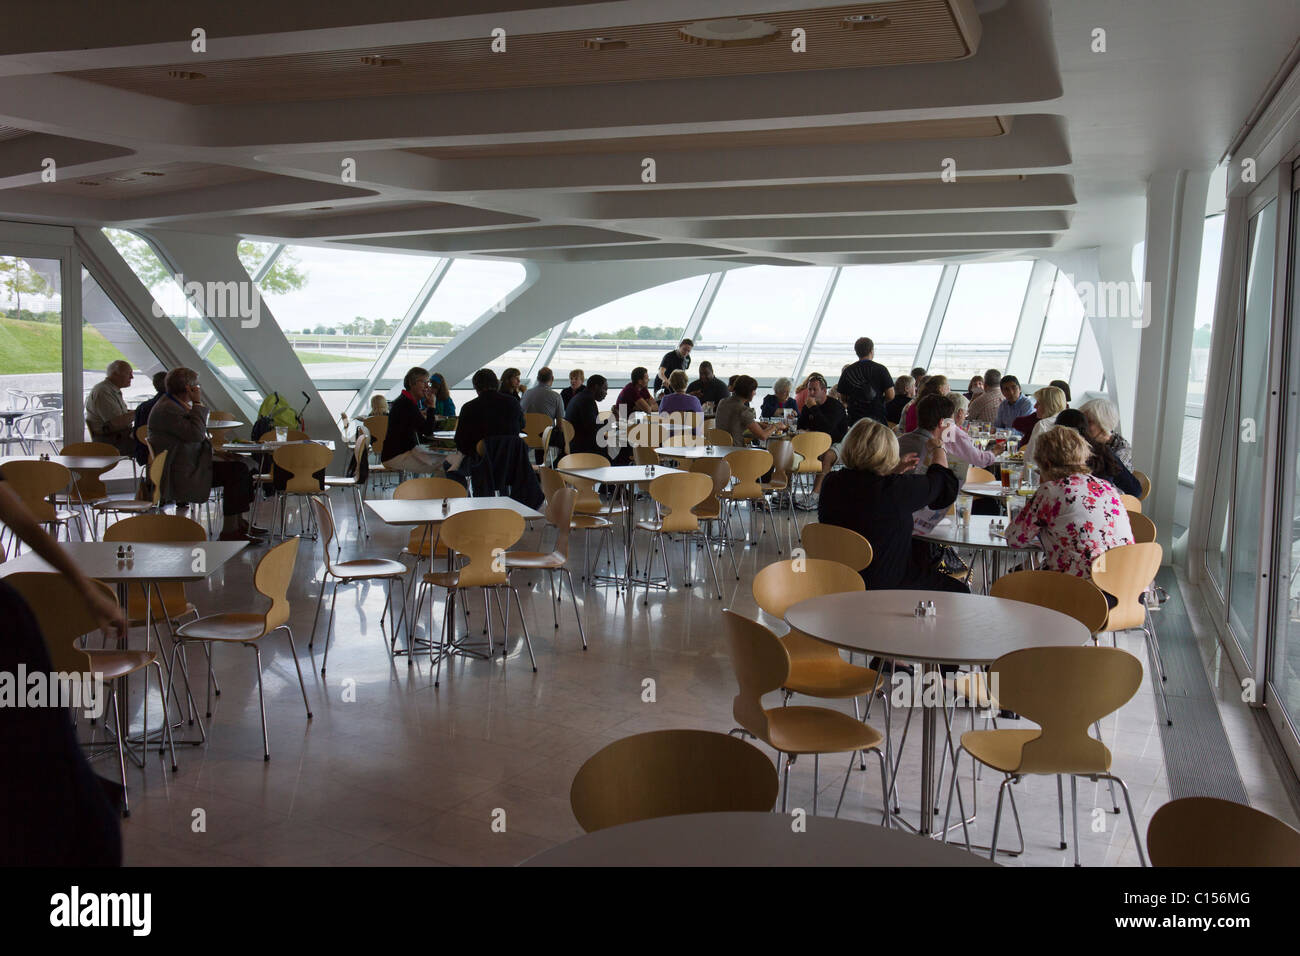 Café Calatrava, Quadracci Pavilion, conçue par Santiago Calatrava, Milwaukee, Wisconsin, États-Unis Banque D'Images